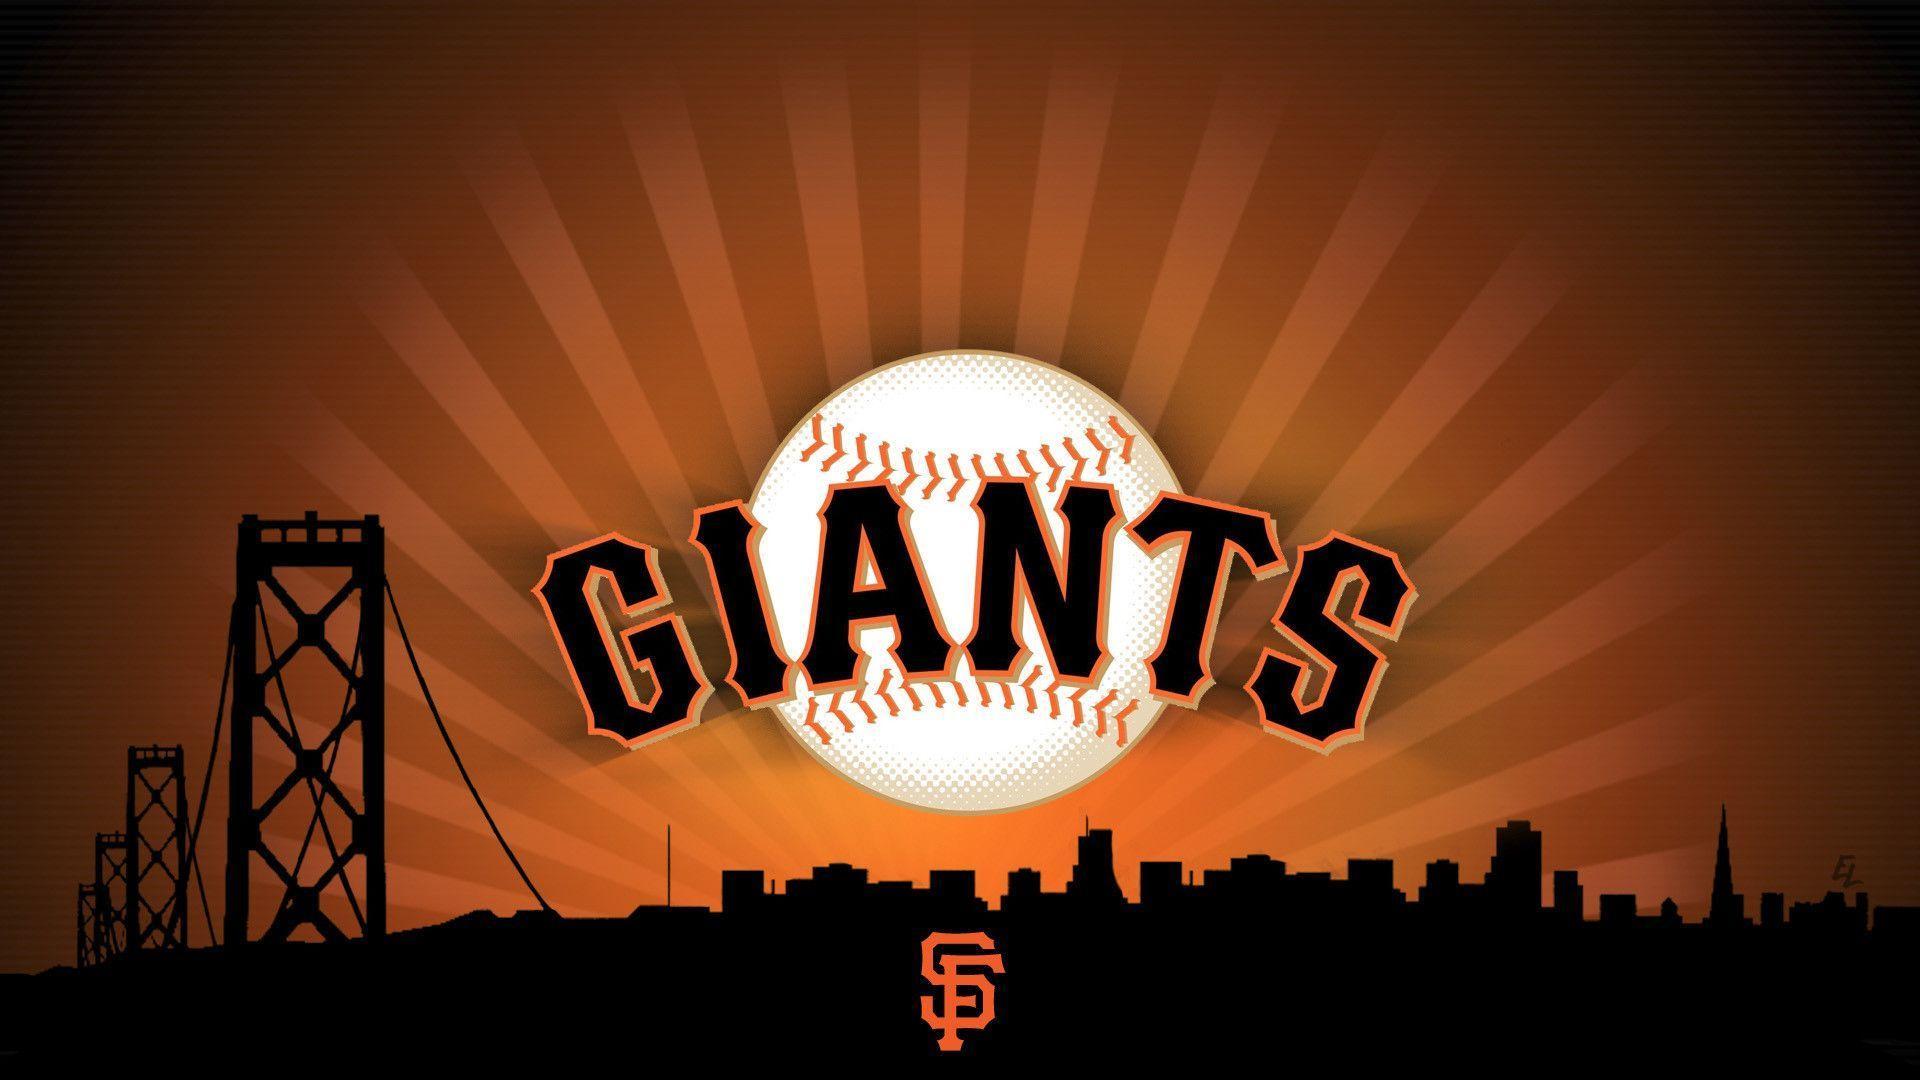 San Francisco Giants MLB wallpapers